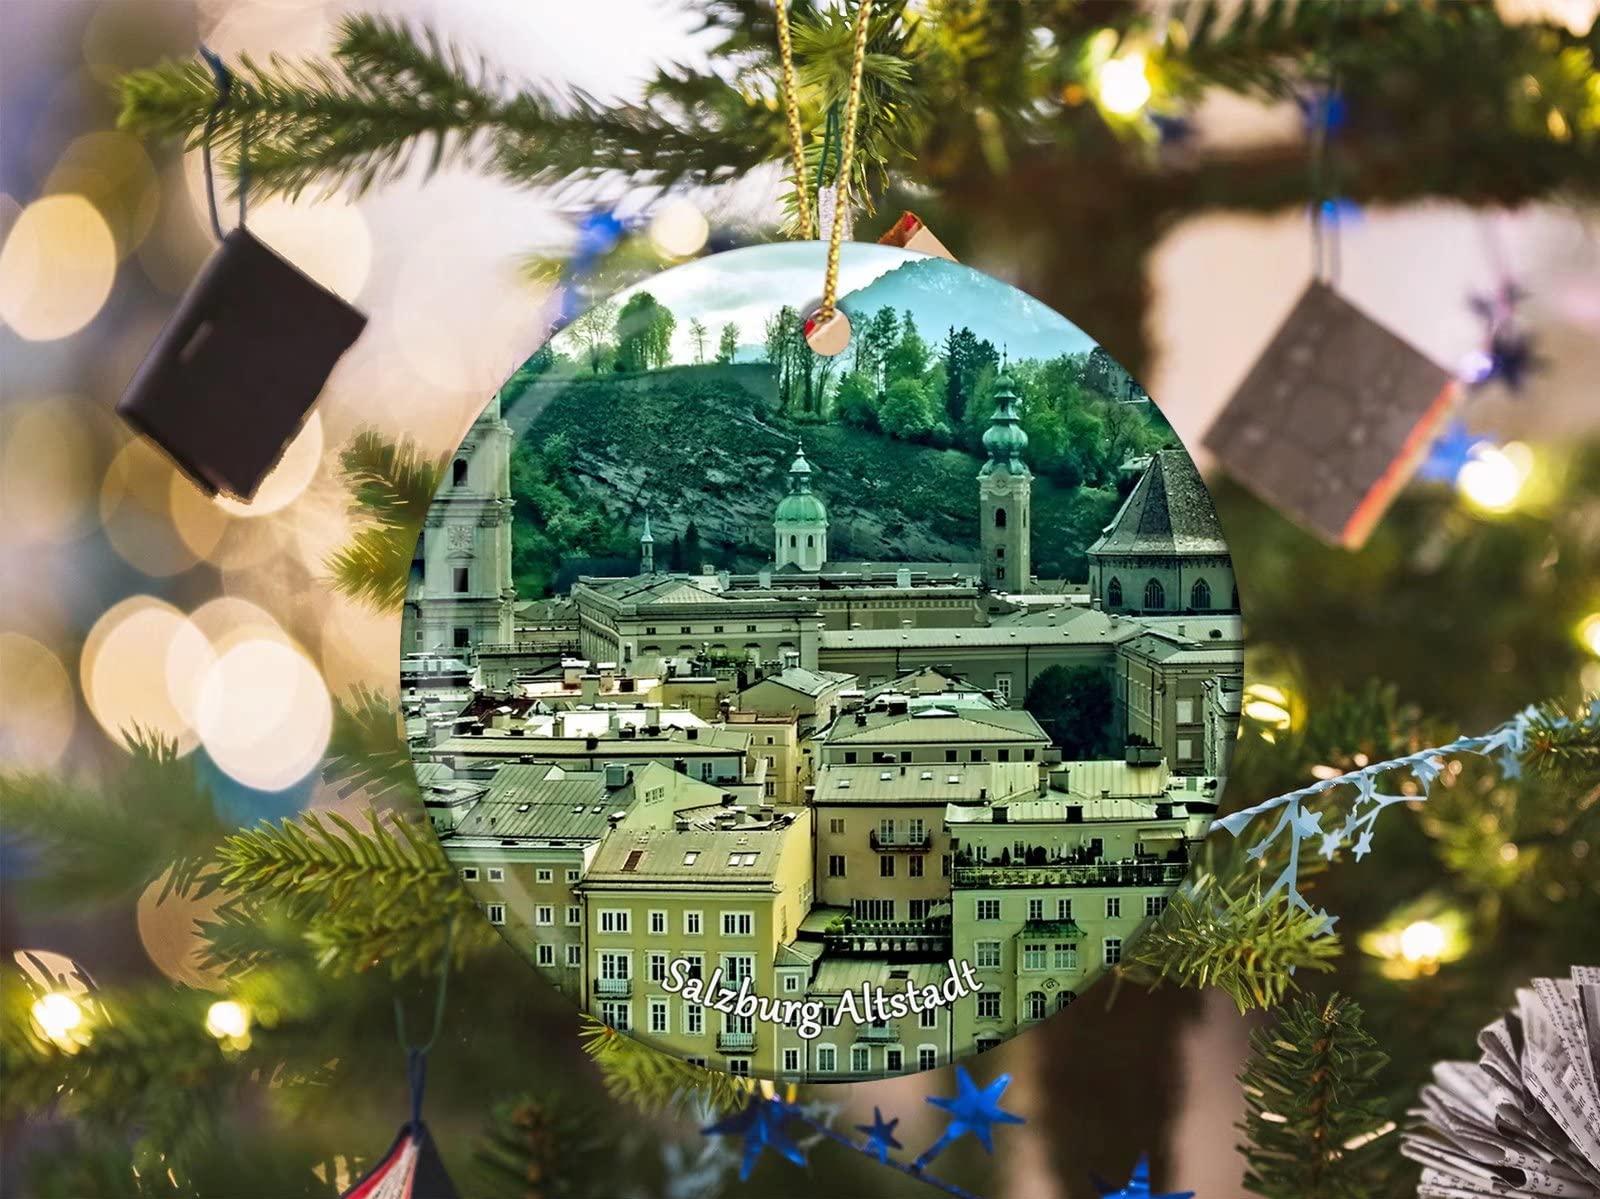 Amazon Austria Salzburg Altstadt Christmas Ornaments For Tree